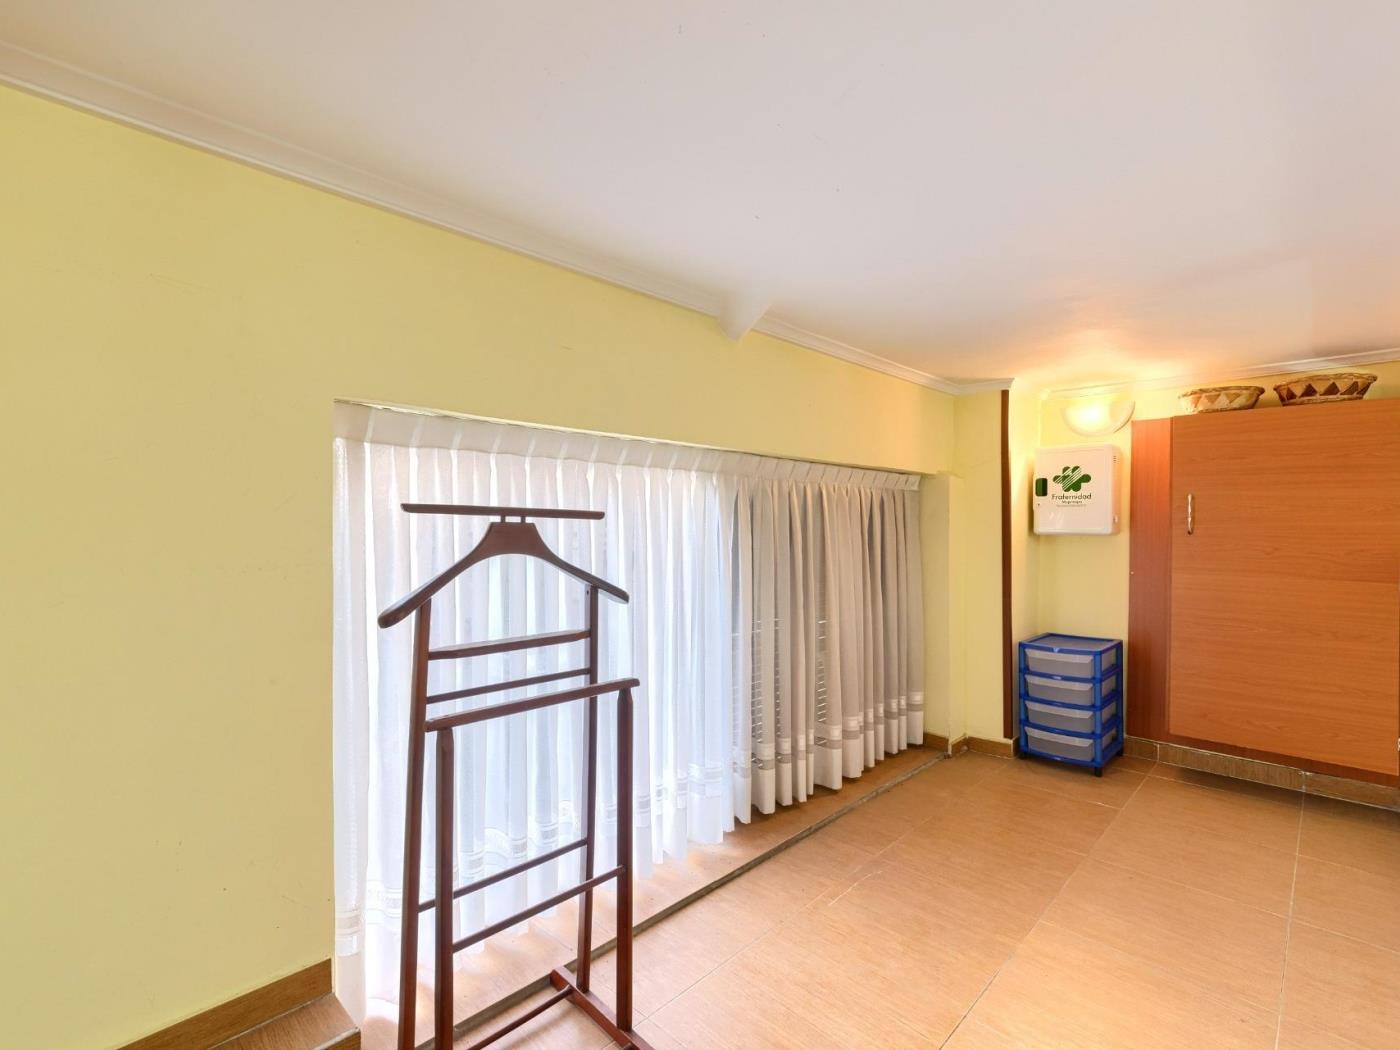 Special apartment, BEC, H. Cruces, Garage, 15' Bilbao in Barakaldo